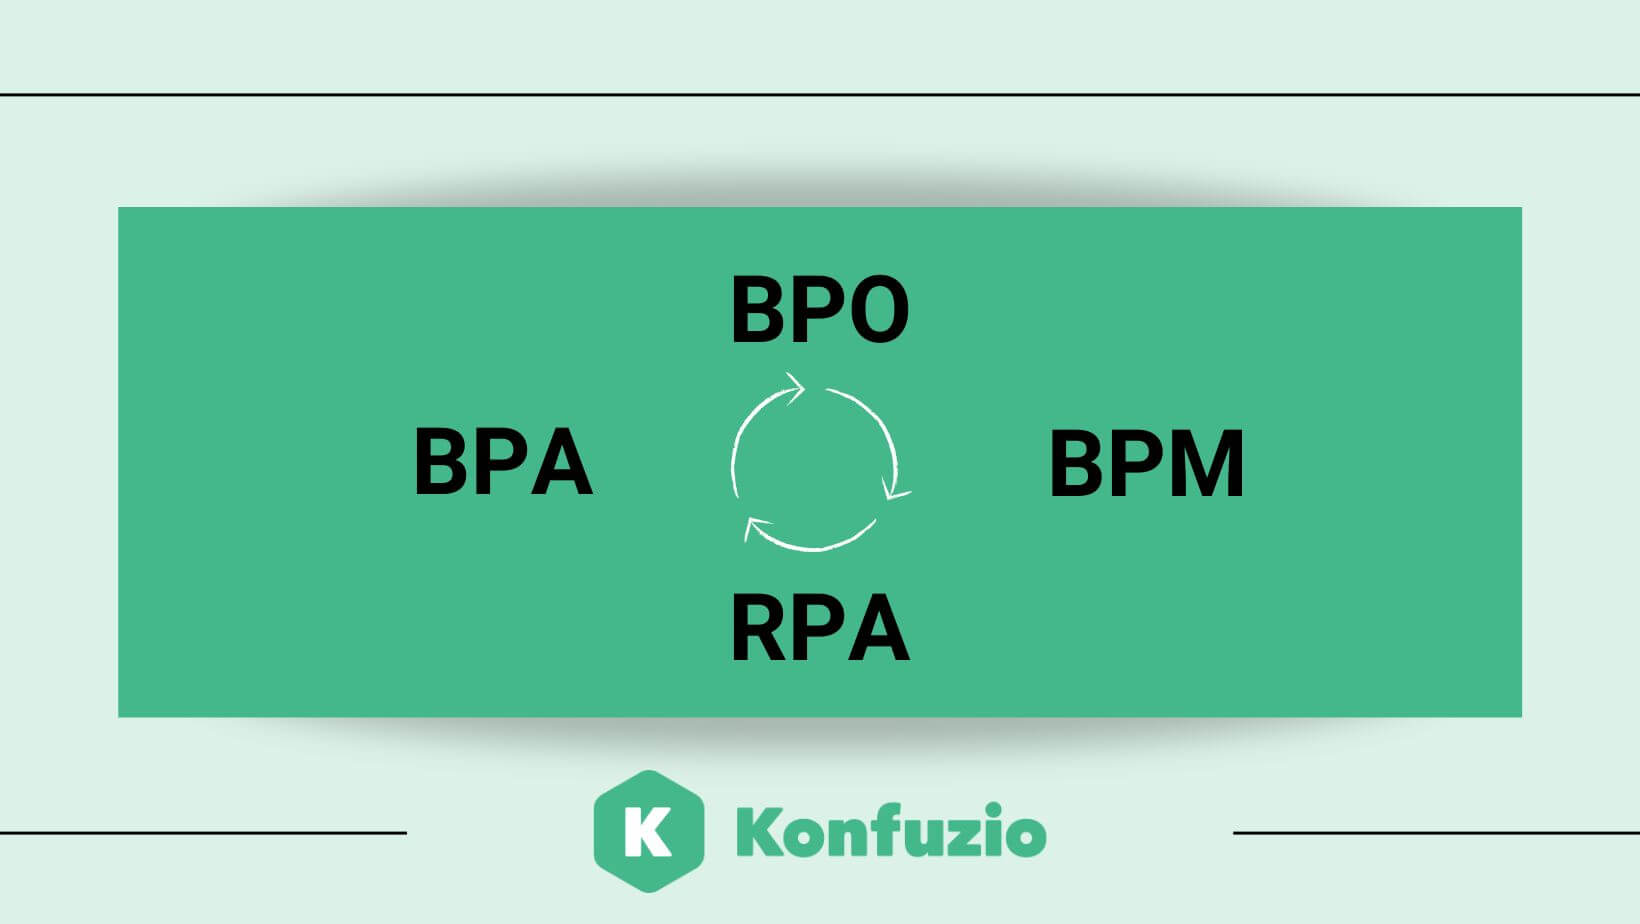 BPA Software BPO BPM RPA sur fond vert